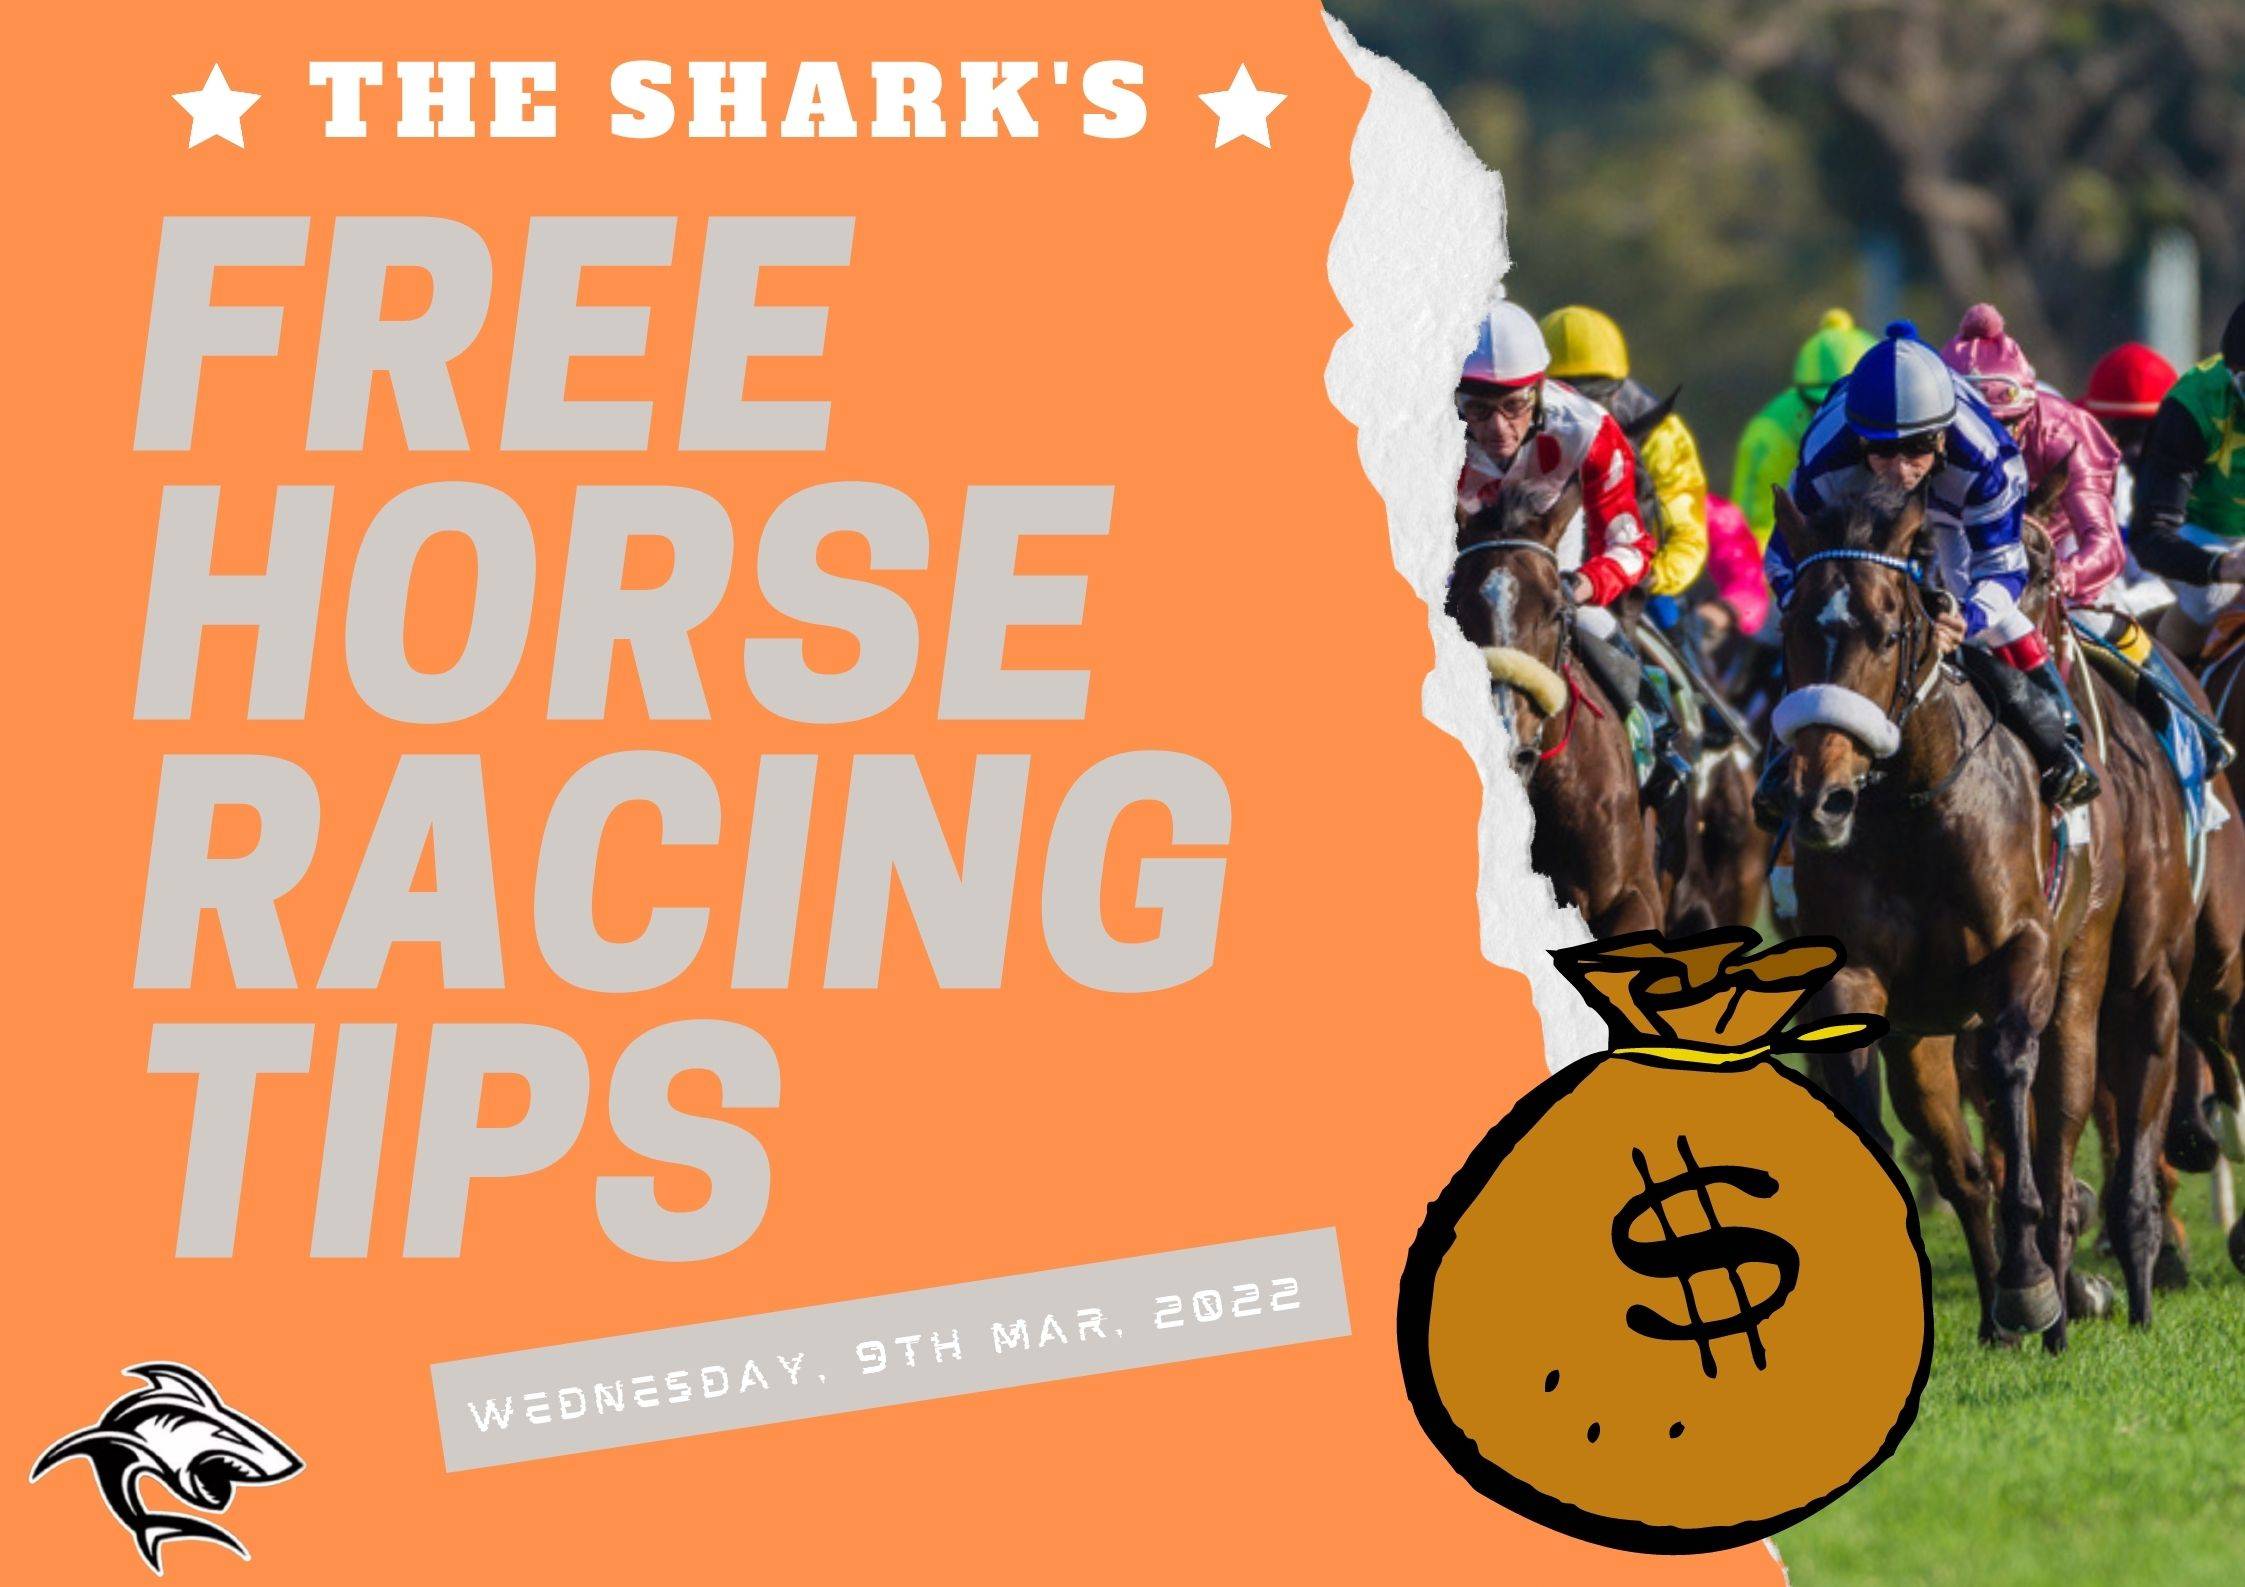 Free Horse Racing Tips - 9th Mar